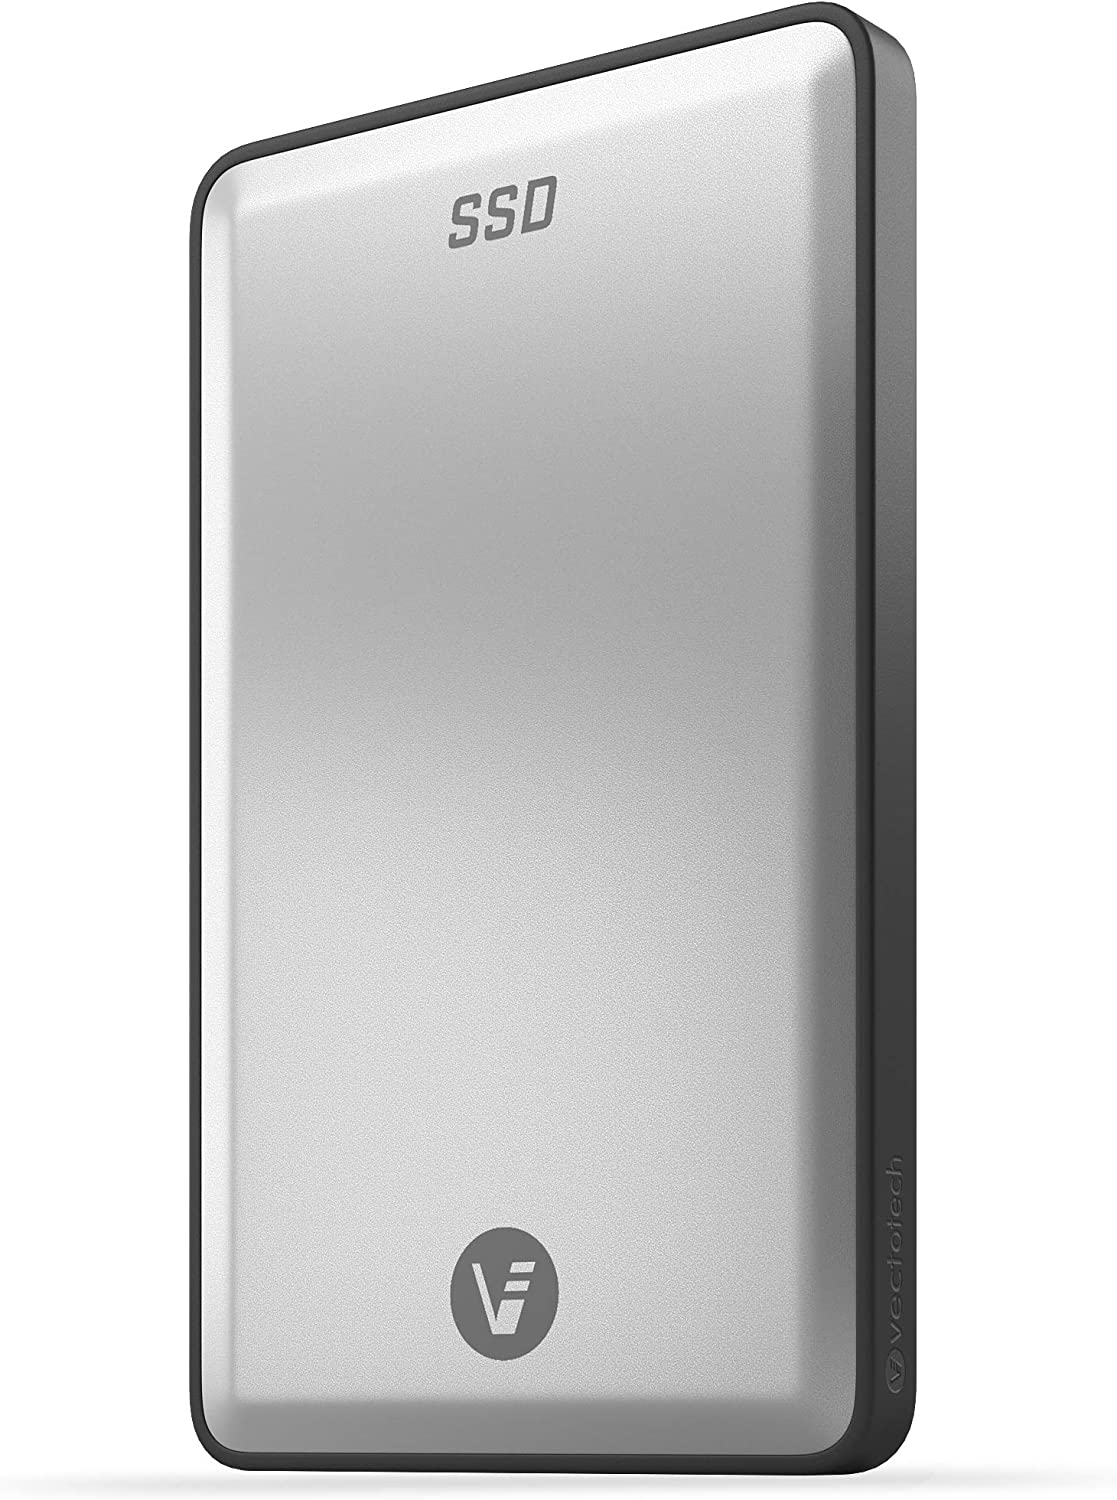 VectoTech Rapid - Unidad de estado sólido portátil SSD externo USB-C de 8 TB (USB 3.1 Gen 2) – Transferencia de datos de hasta 540 MB/s, flash NAND 3D